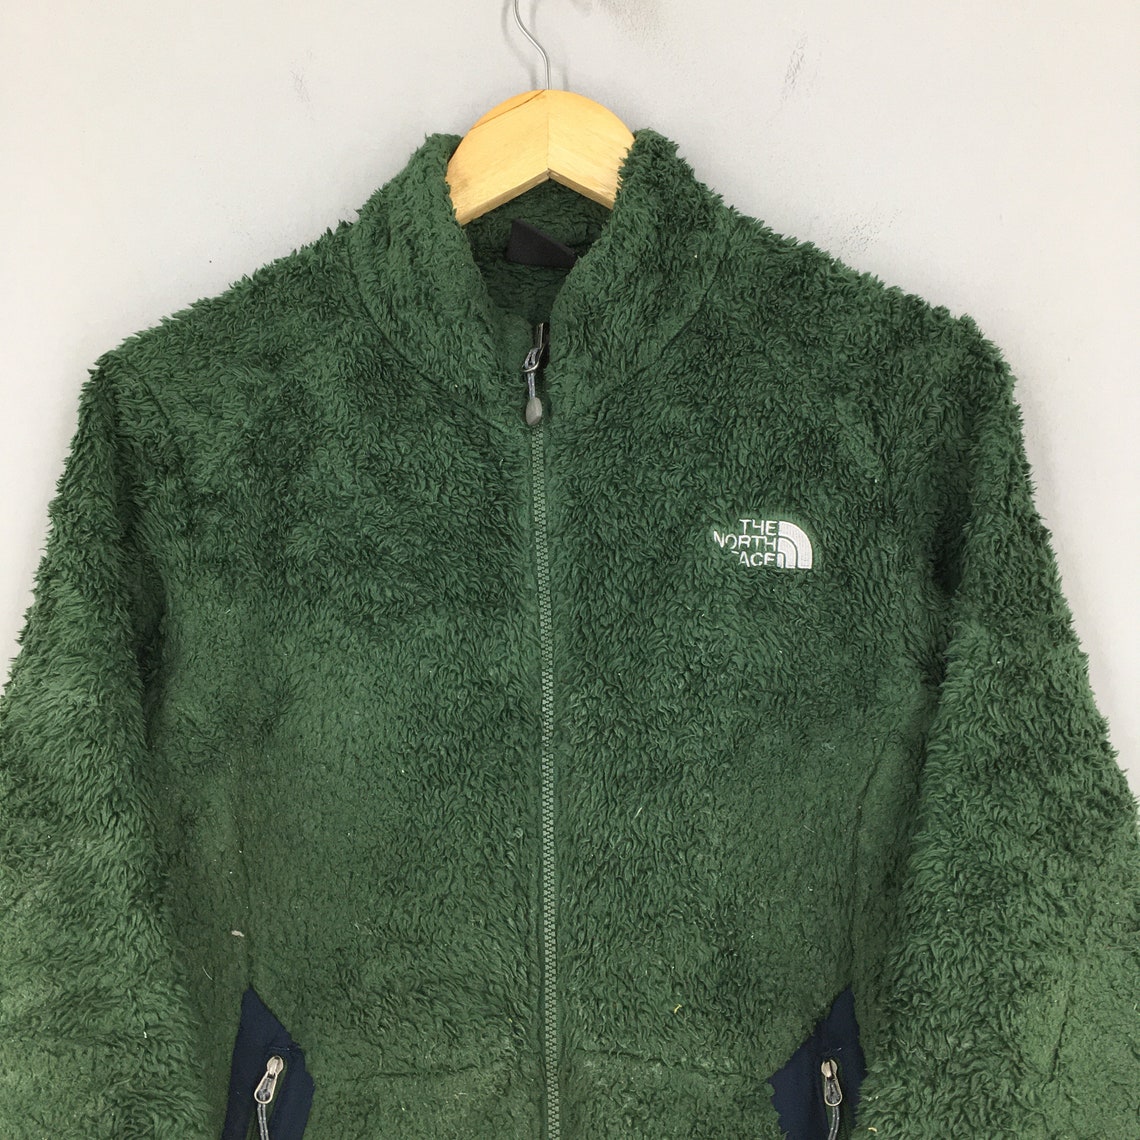 Vintage The North Face Fleece Jacket Medium North Face | Etsy